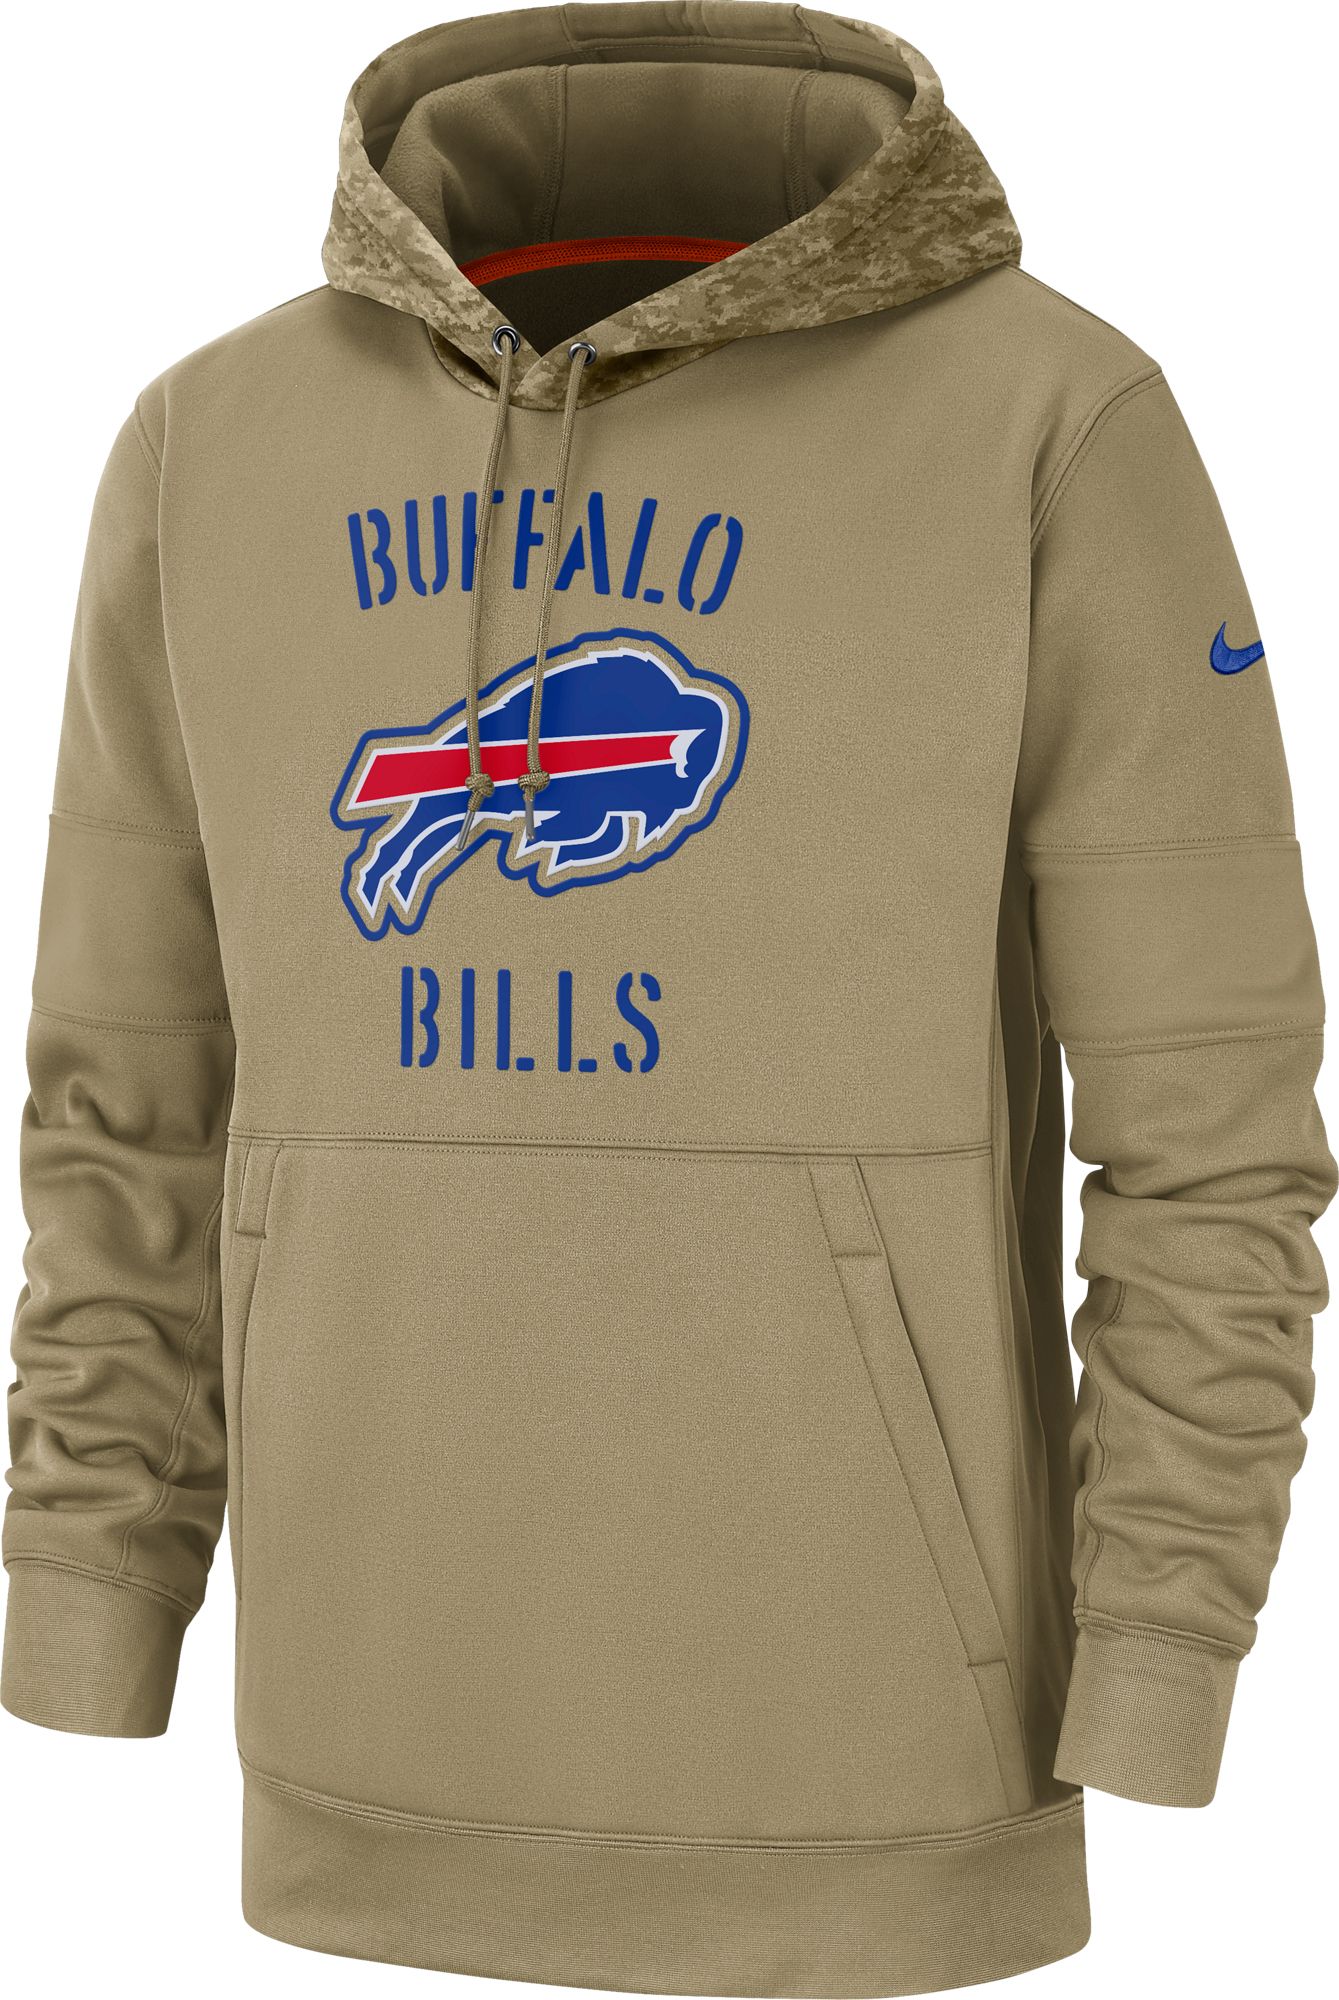 buffalo bills military hoodie